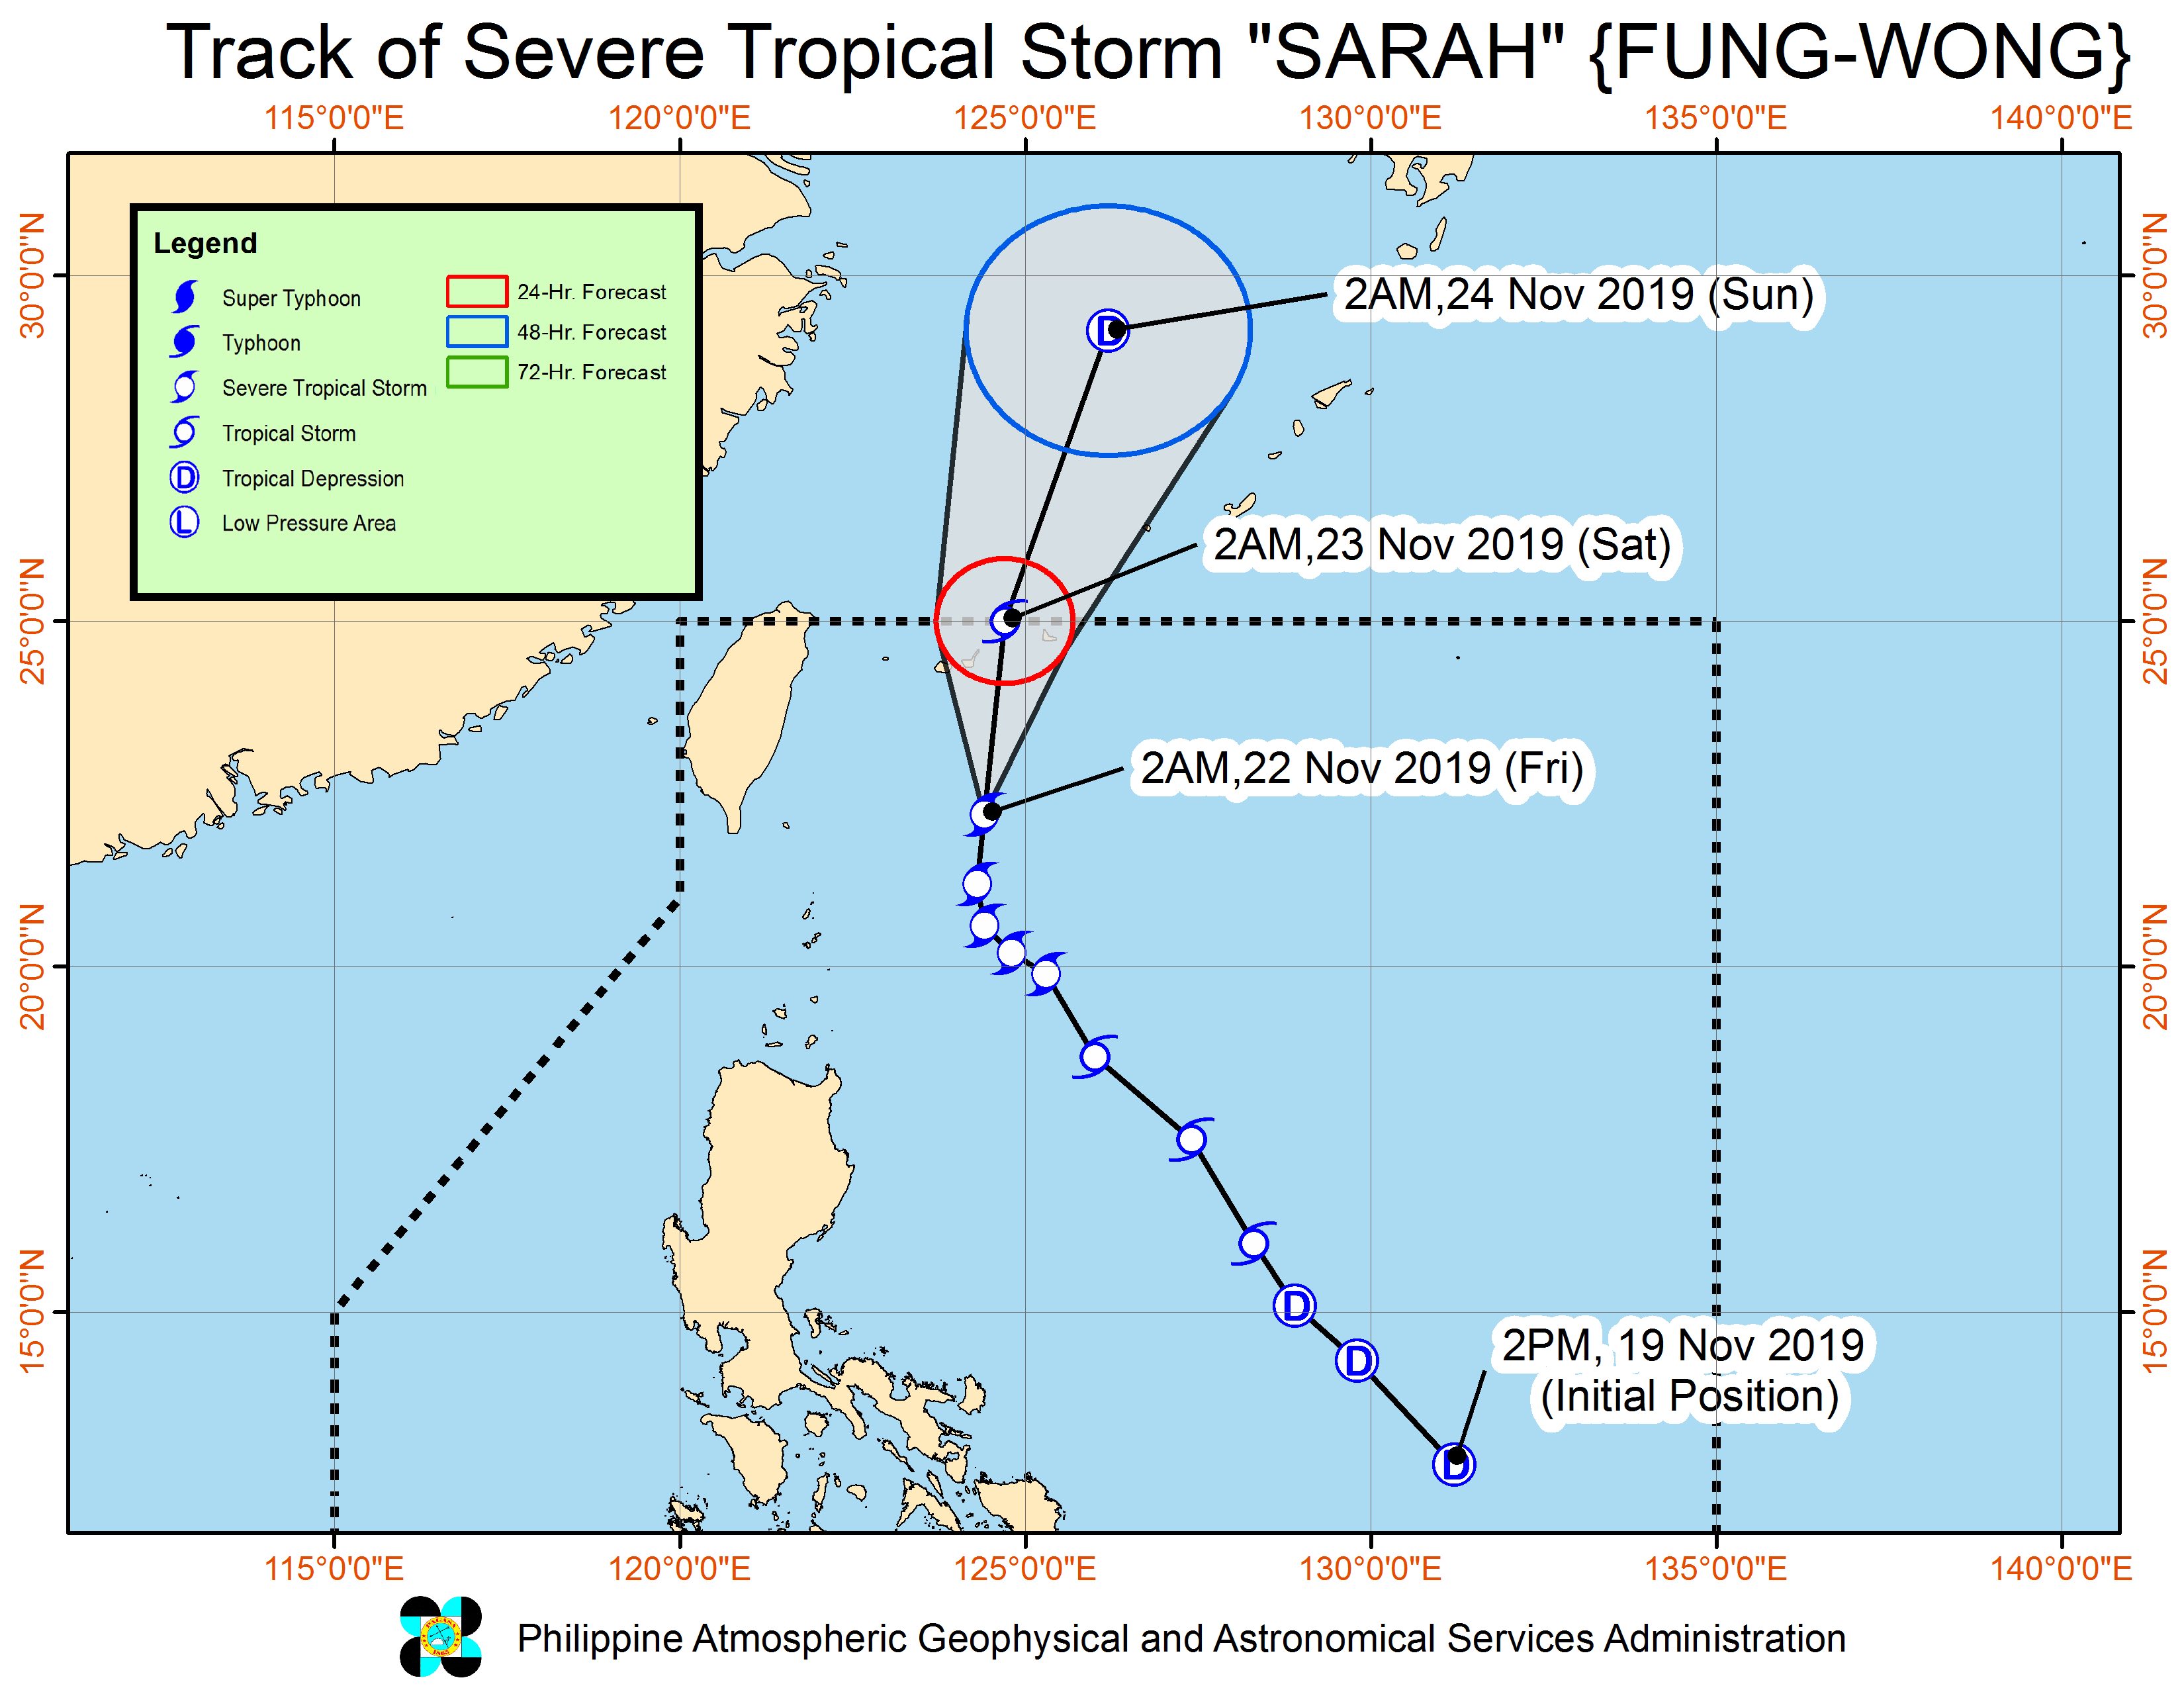 Forecast track of Severe Tropical Storm Sarah (Fung-wong) as of November 22, 2019, 5 am. Image from PAGASA 